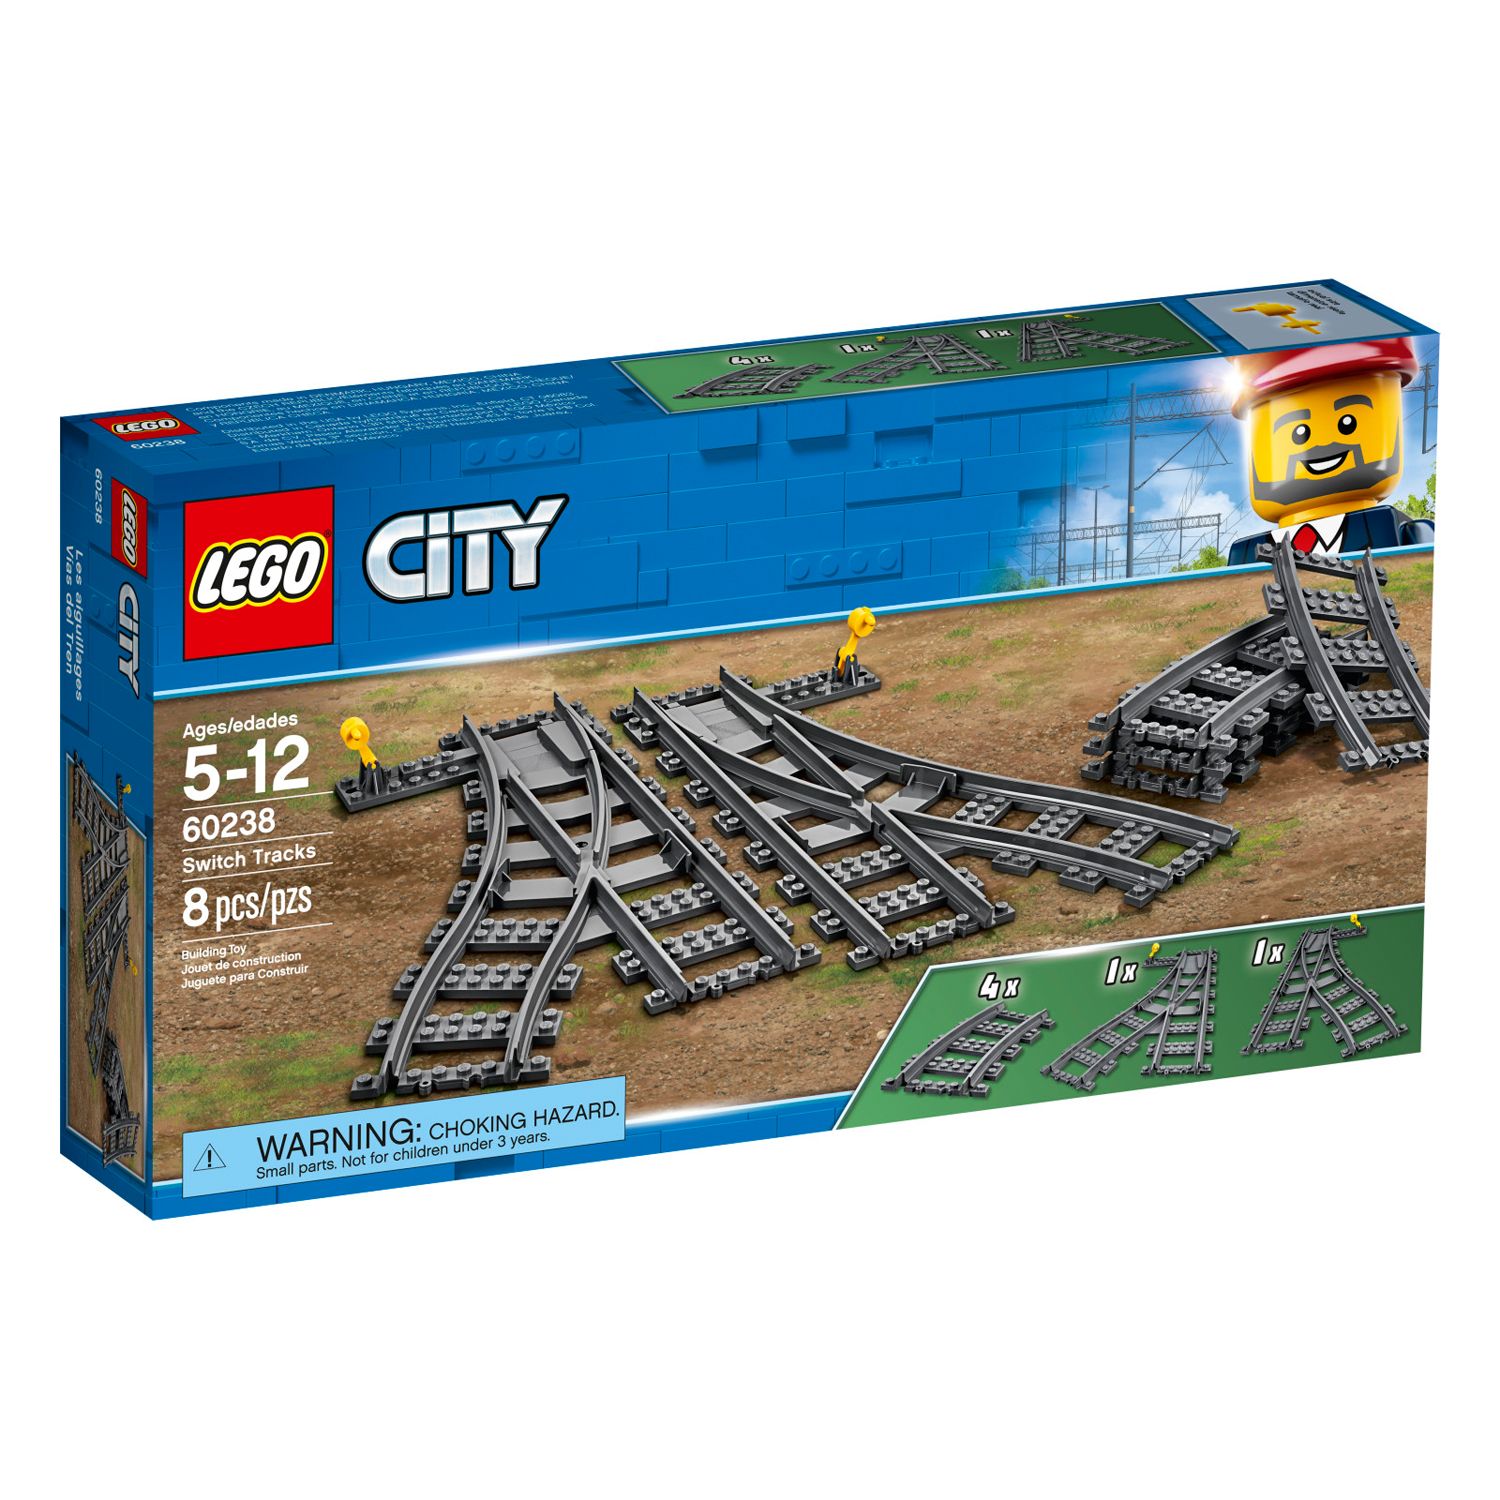 Image for LEGO City Switch Tracks 60238 Set at Kohl's.